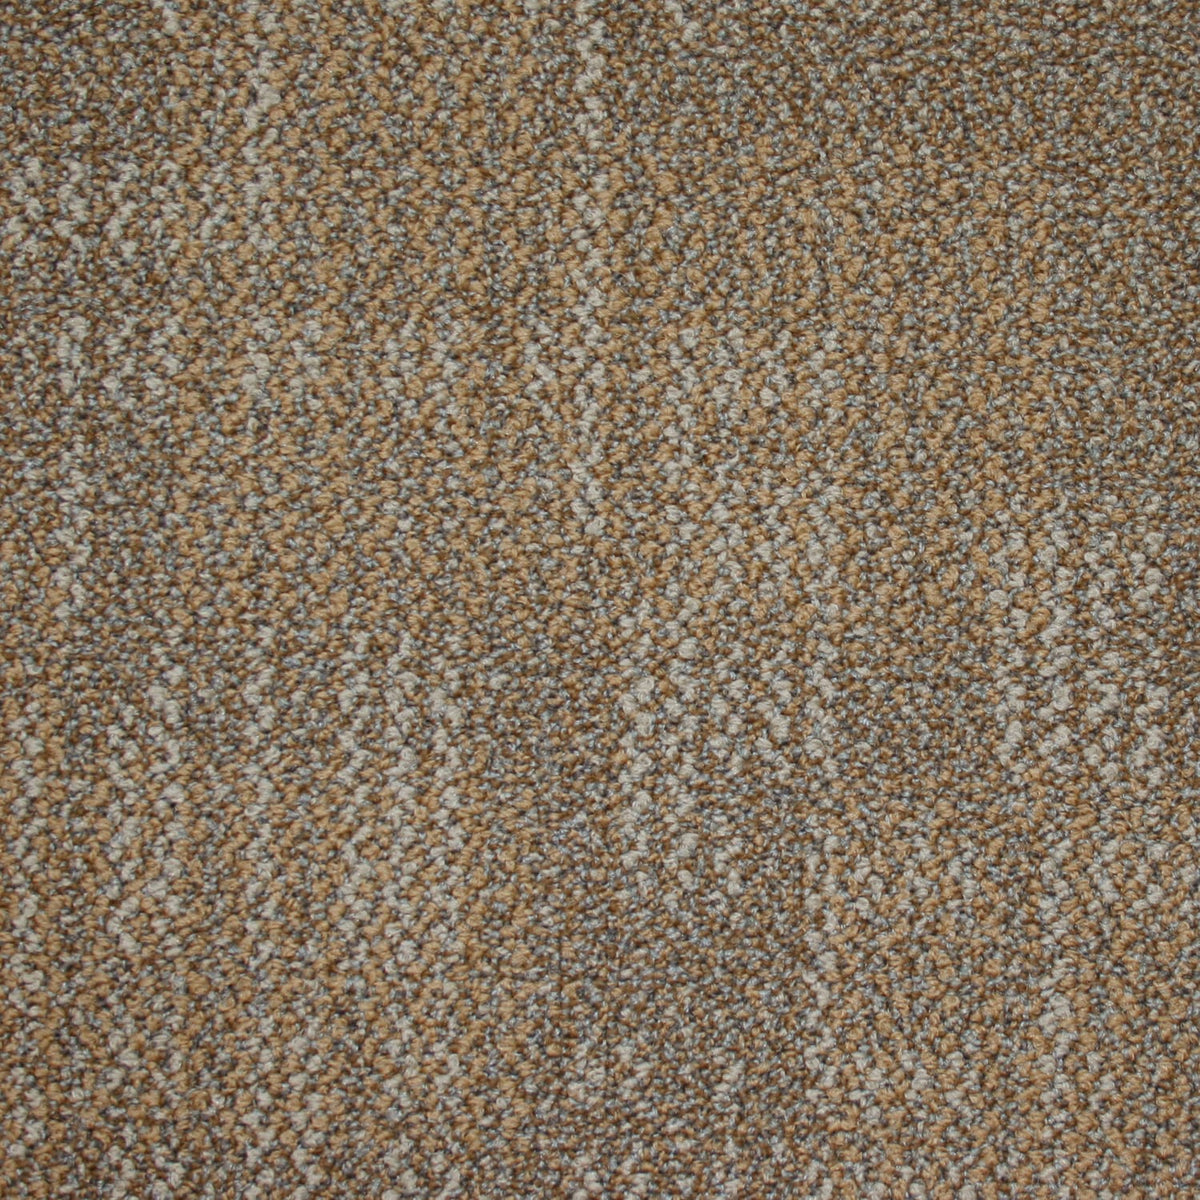 Kraus - Van Der Rohe- Carpet Tile - Black Pepper